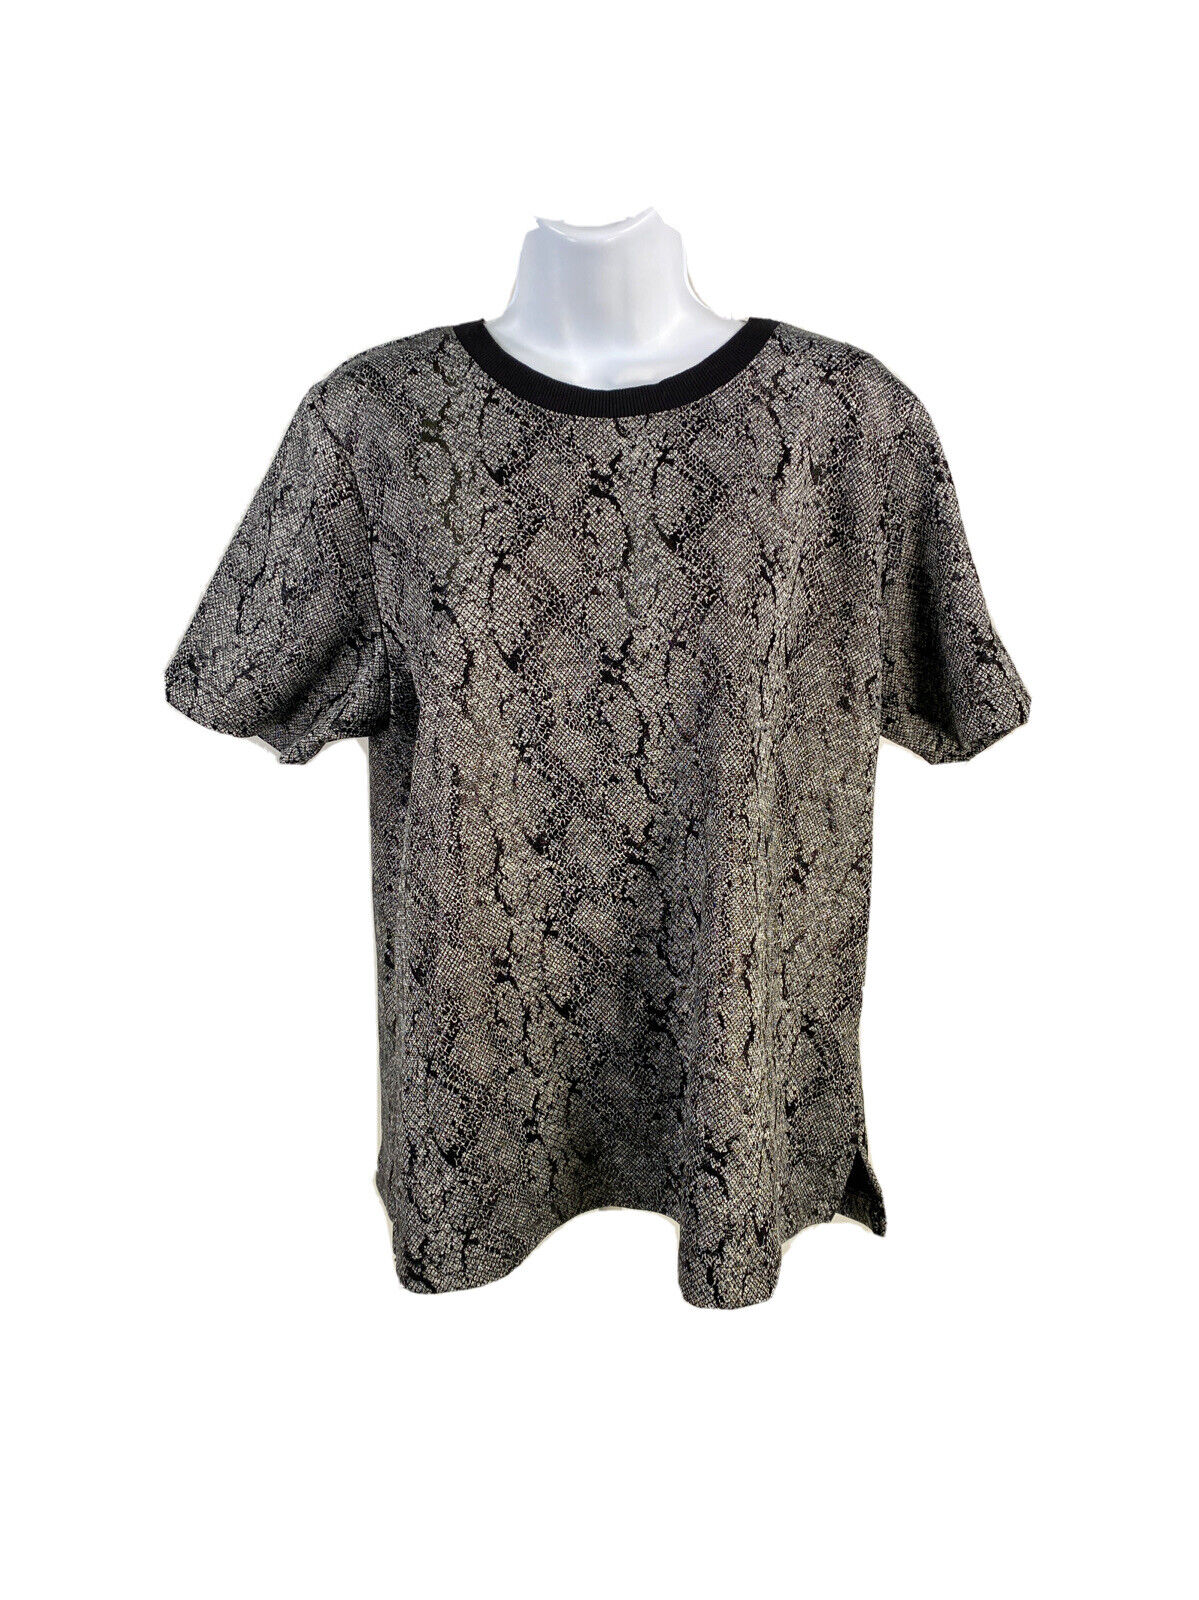 Chico's Women's Black/Gray Snake Print Jacquard Short Sleeve T-Shirt Sz 2